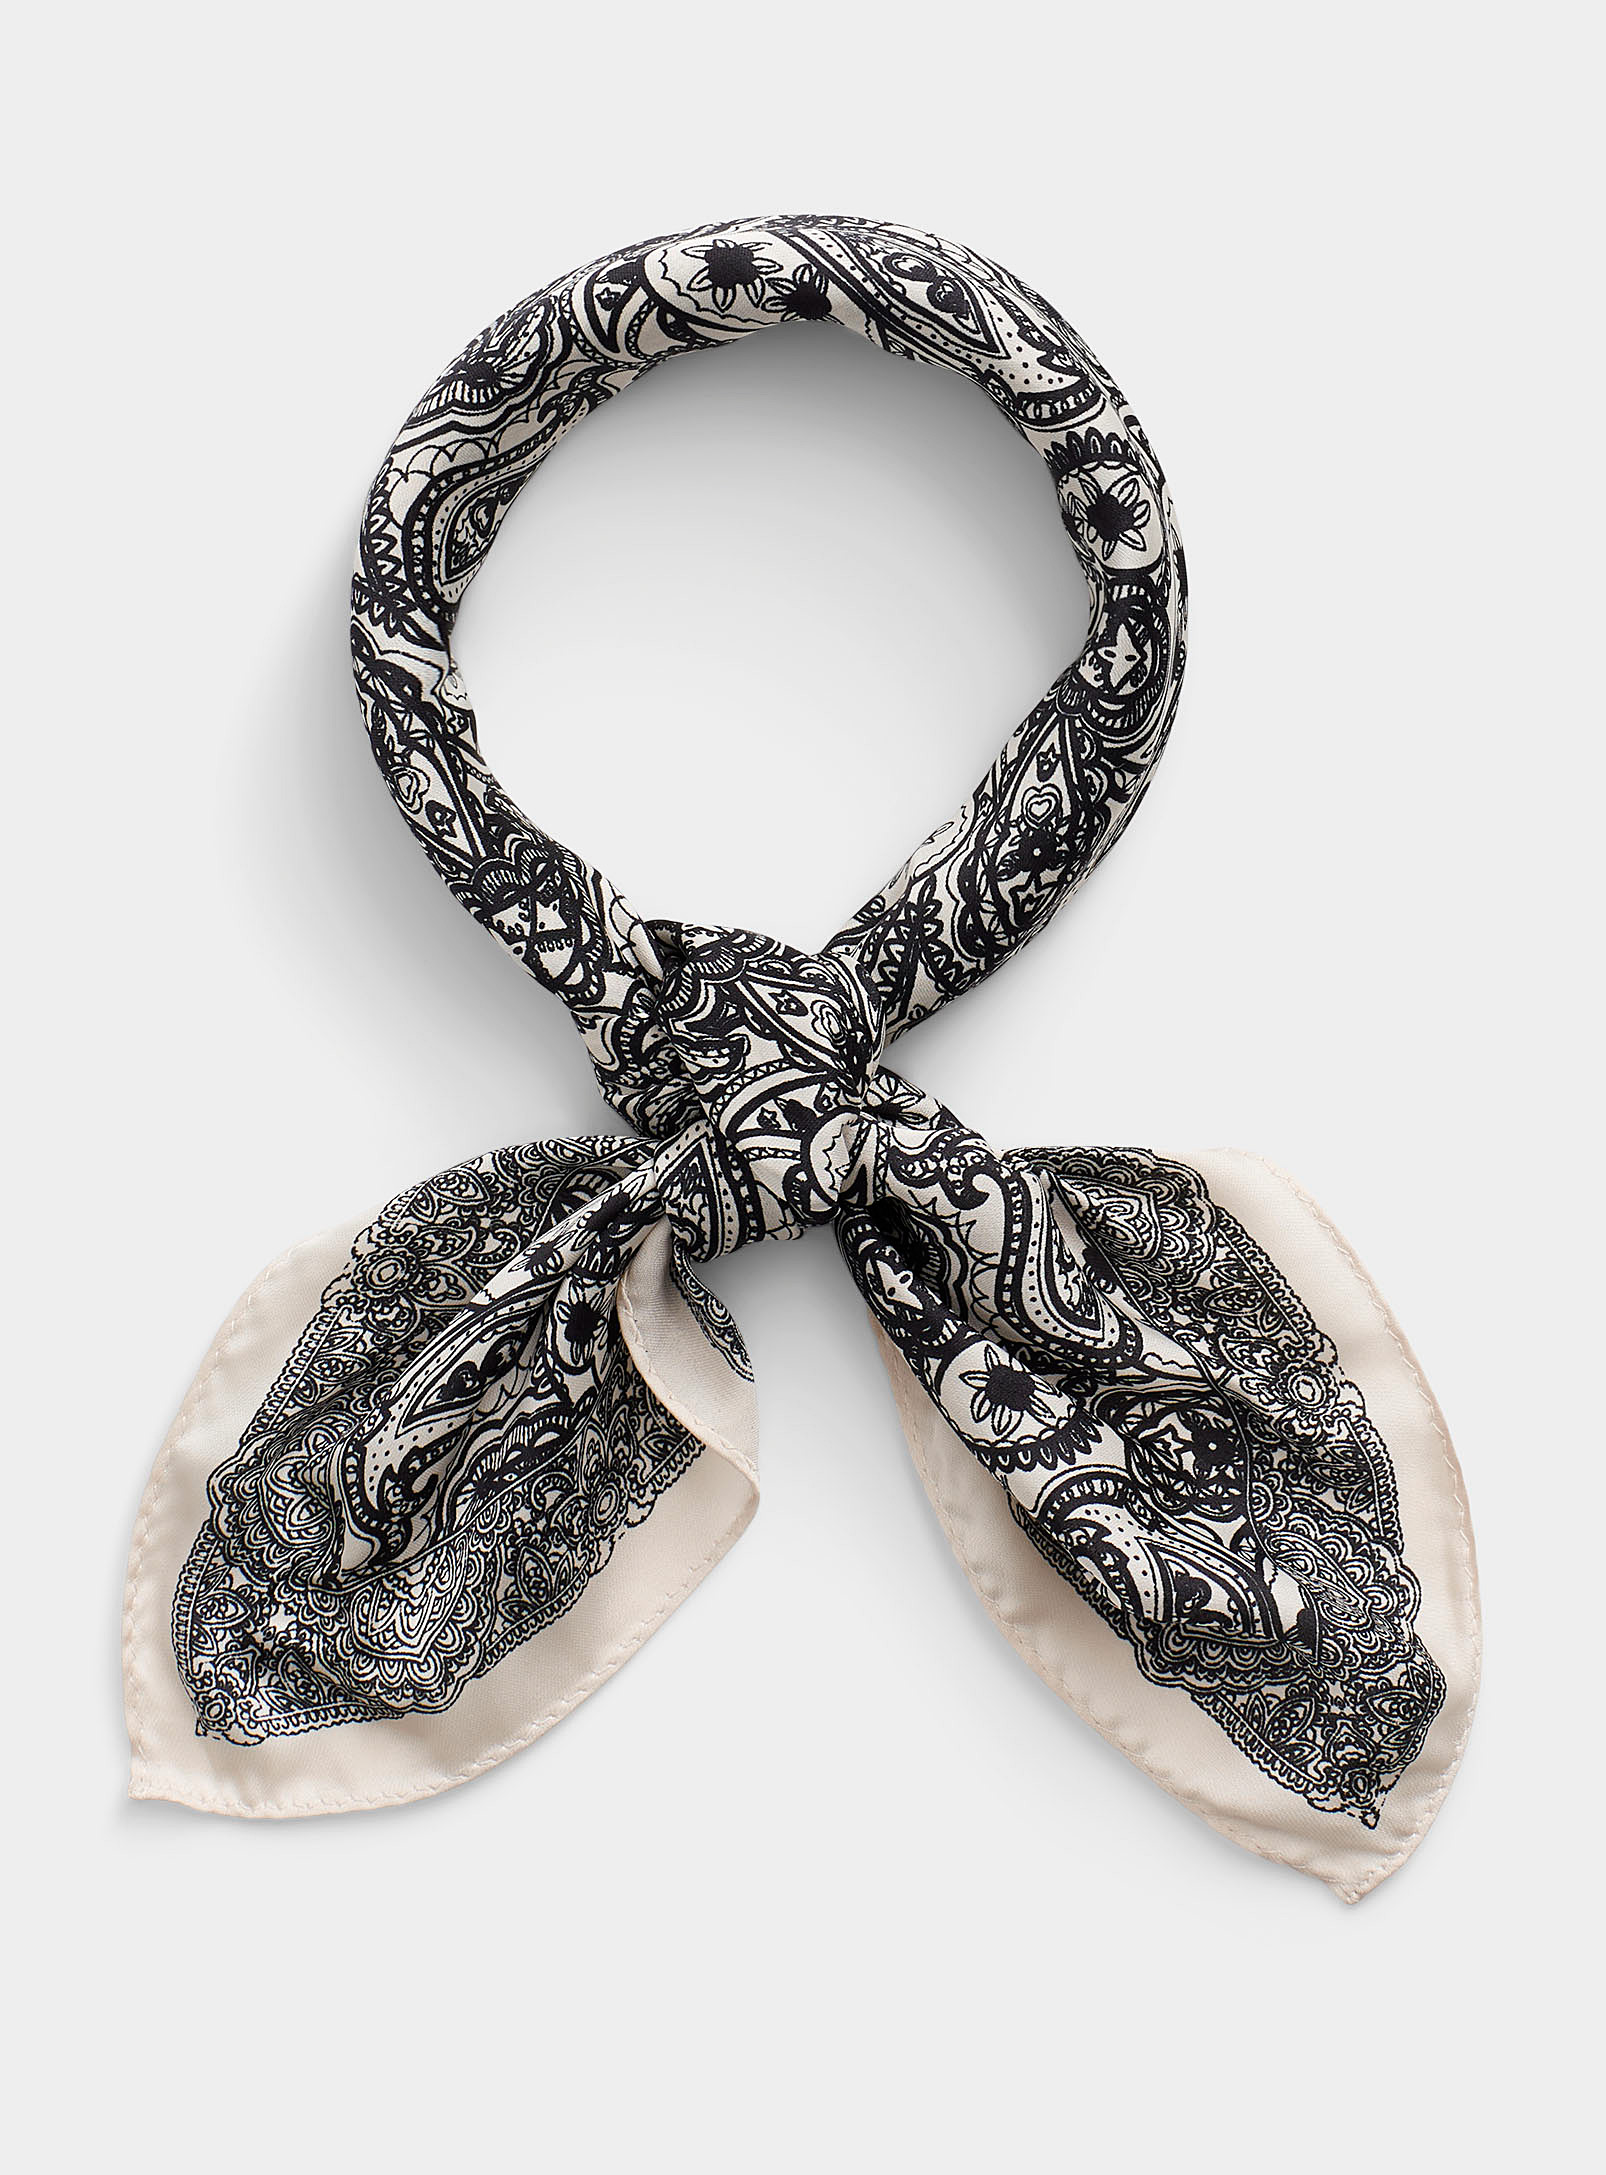 Simons - Women's Black-and-white paisley scarf